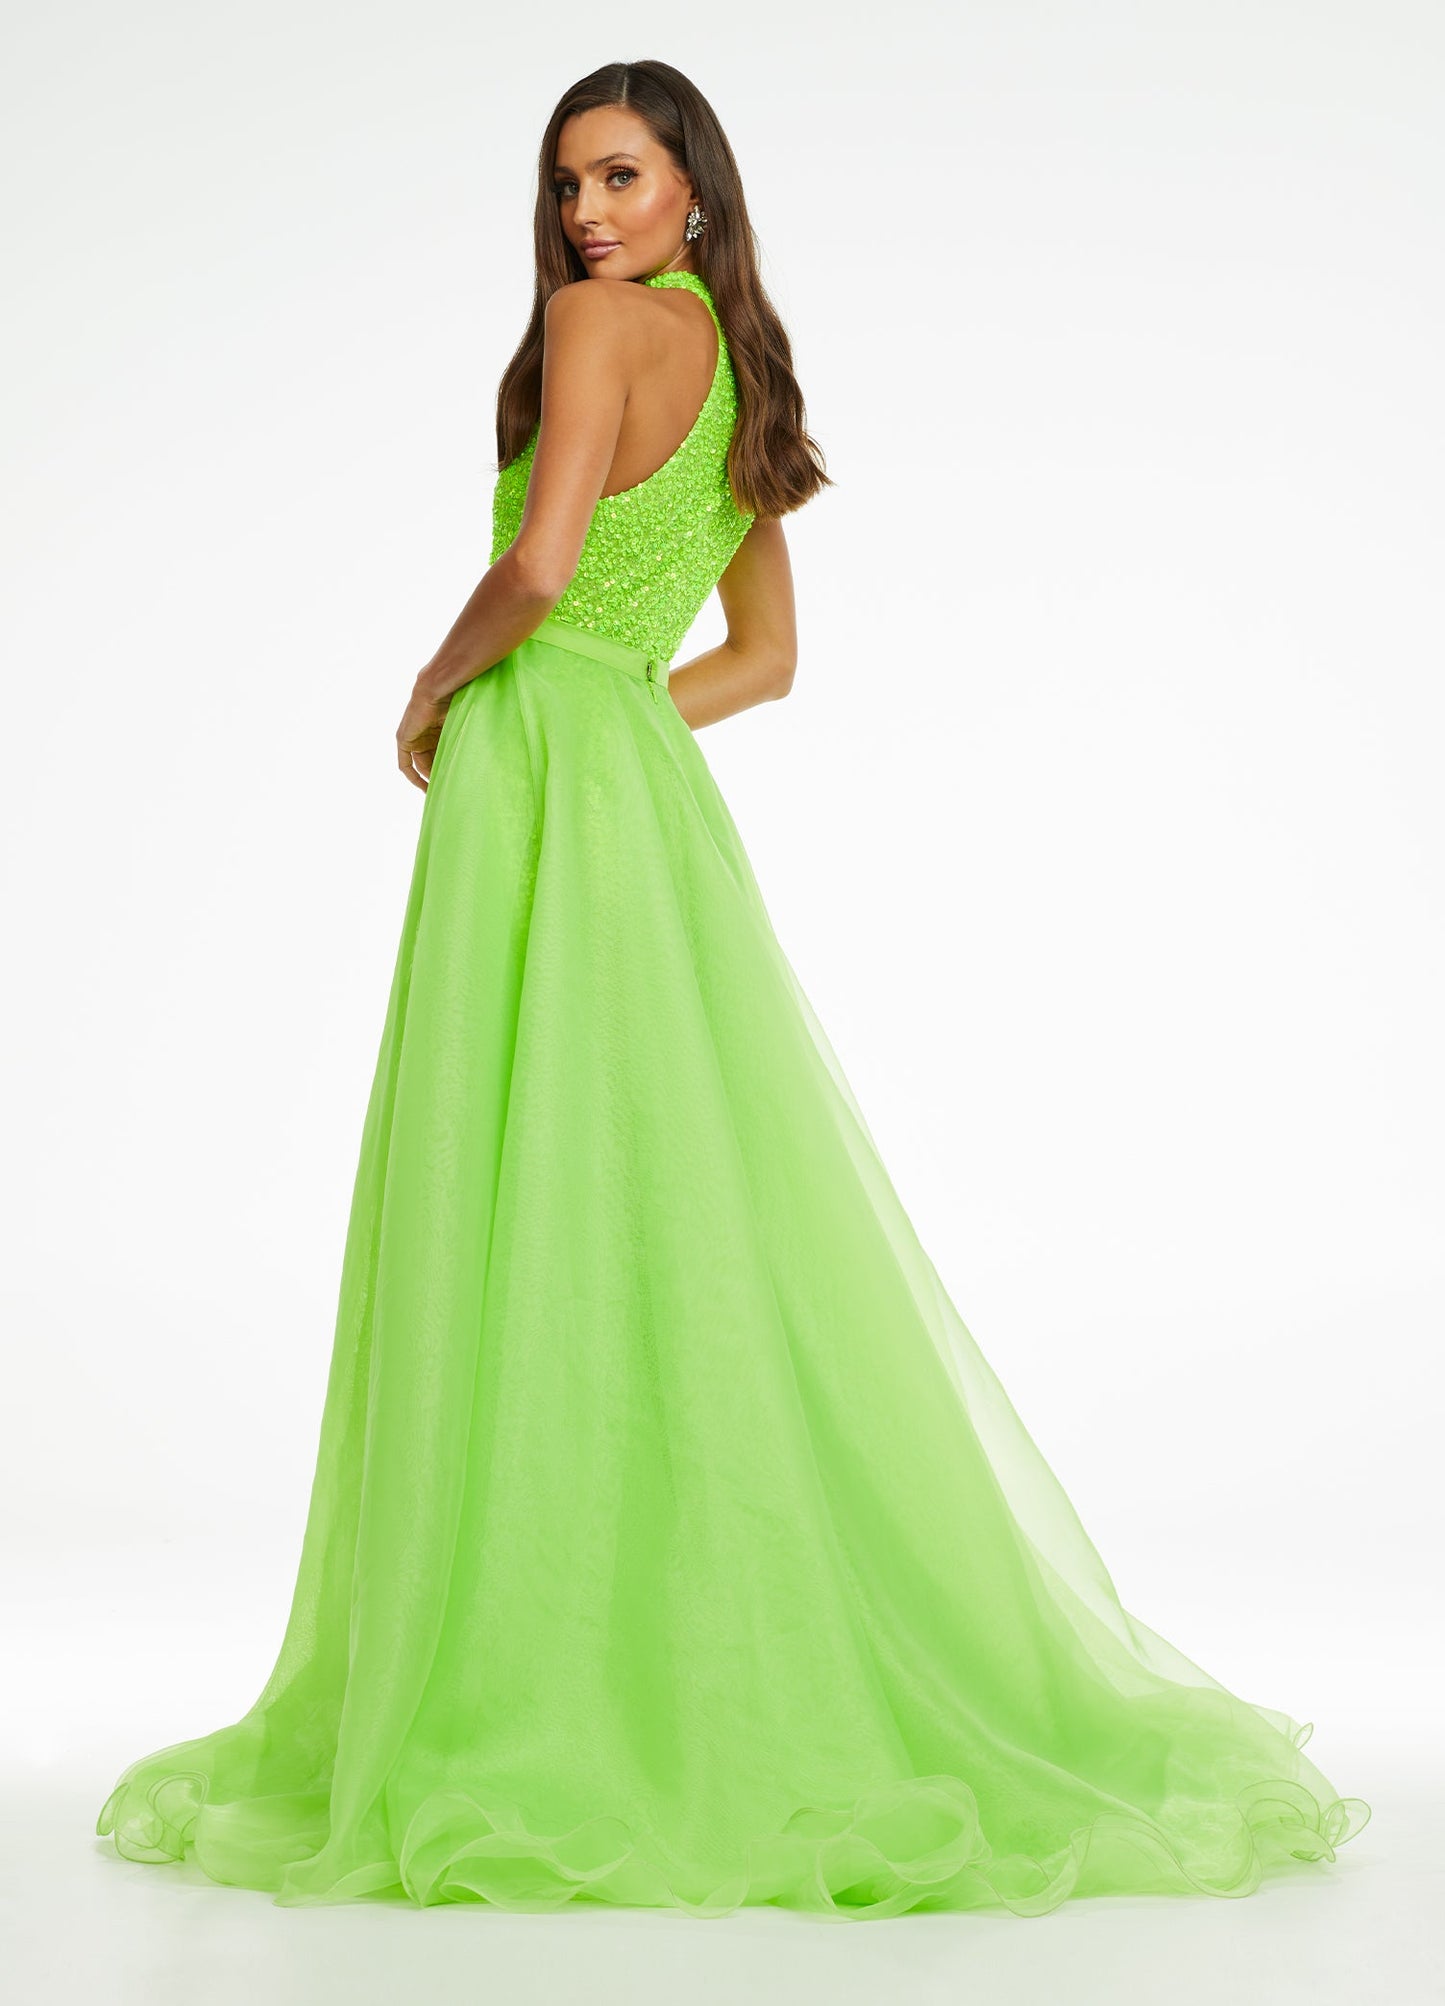 Ashley Lauren 1740 Size 6, 14 Purple Long Organza Overskirt Wire Hem Pageant Prom Layers